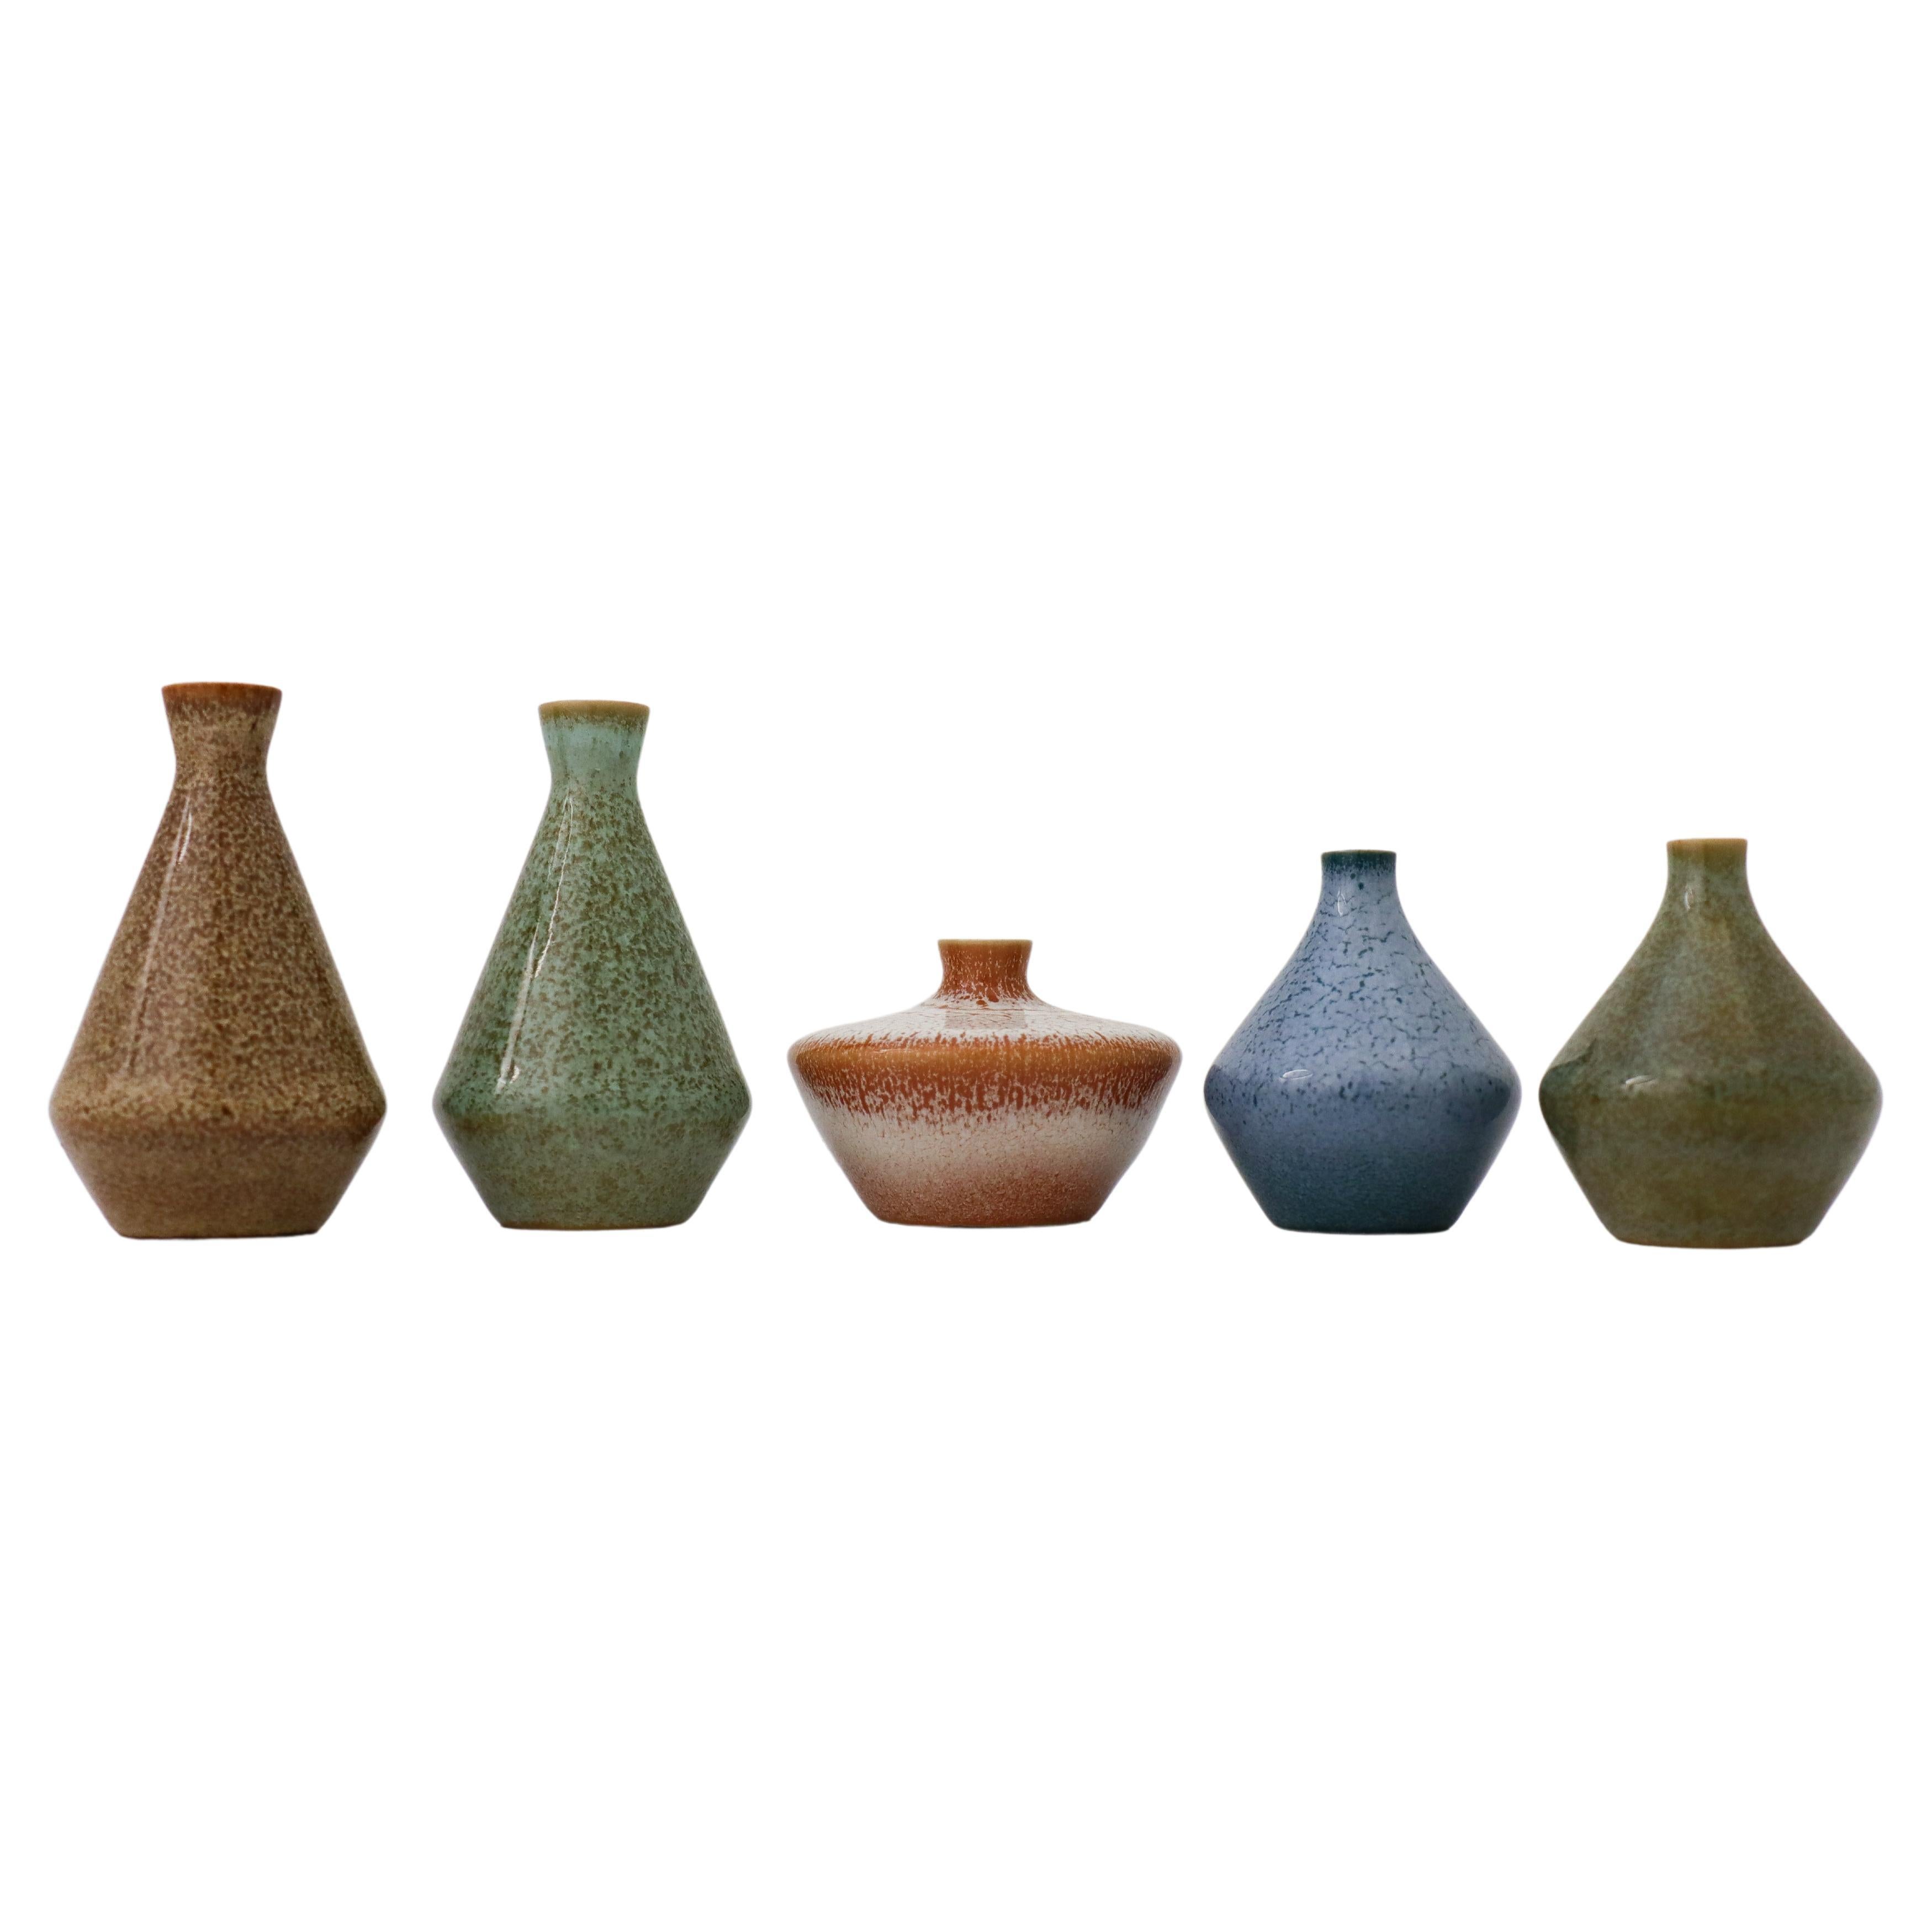 Group of 5 Miniature Vases, Bertil Lundgren, Rörstrand, Midcentury Vintage